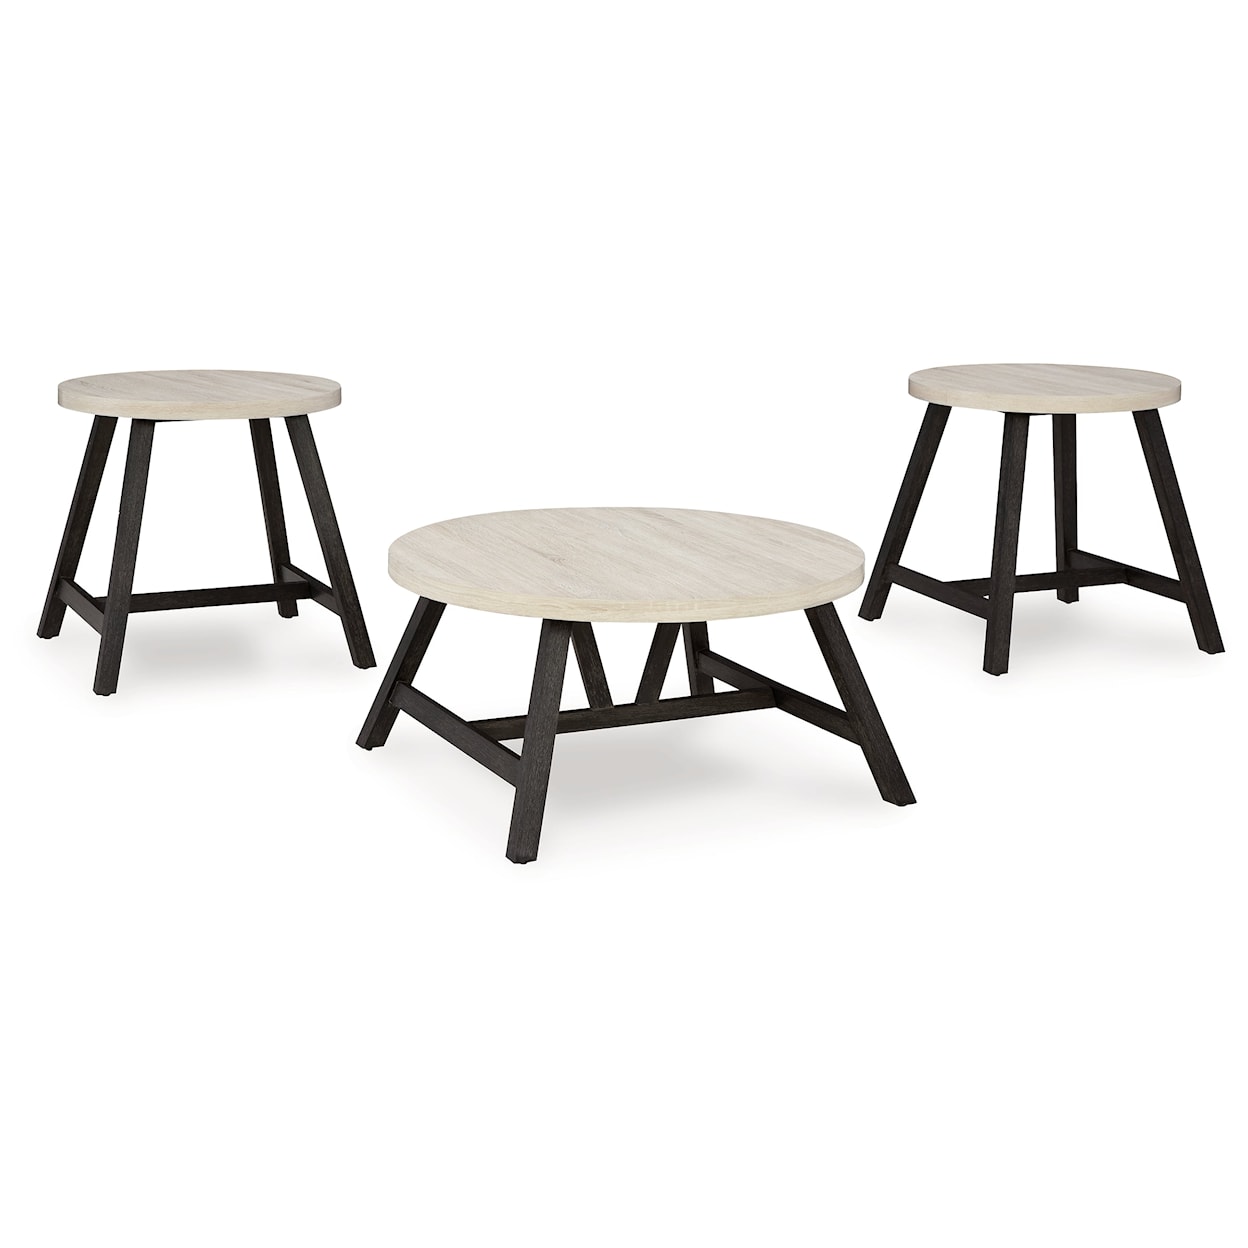 Ashley Furniture Signature Design Fladona Occasional Table (Set of 3)